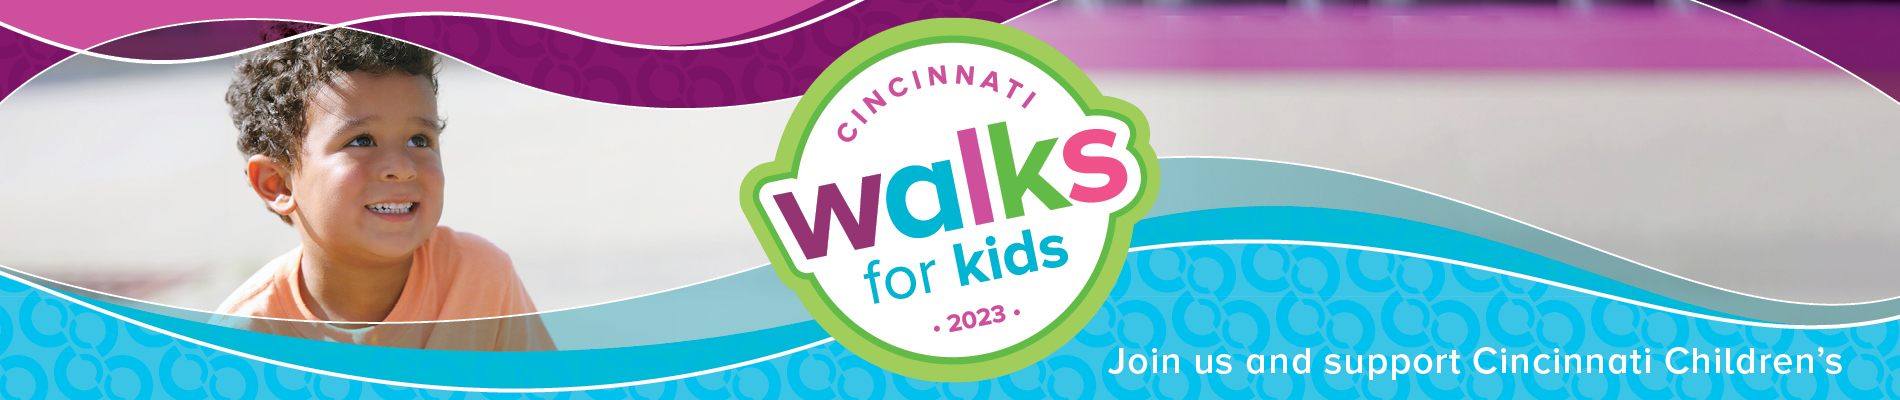 Cincinnati Walks for Kids